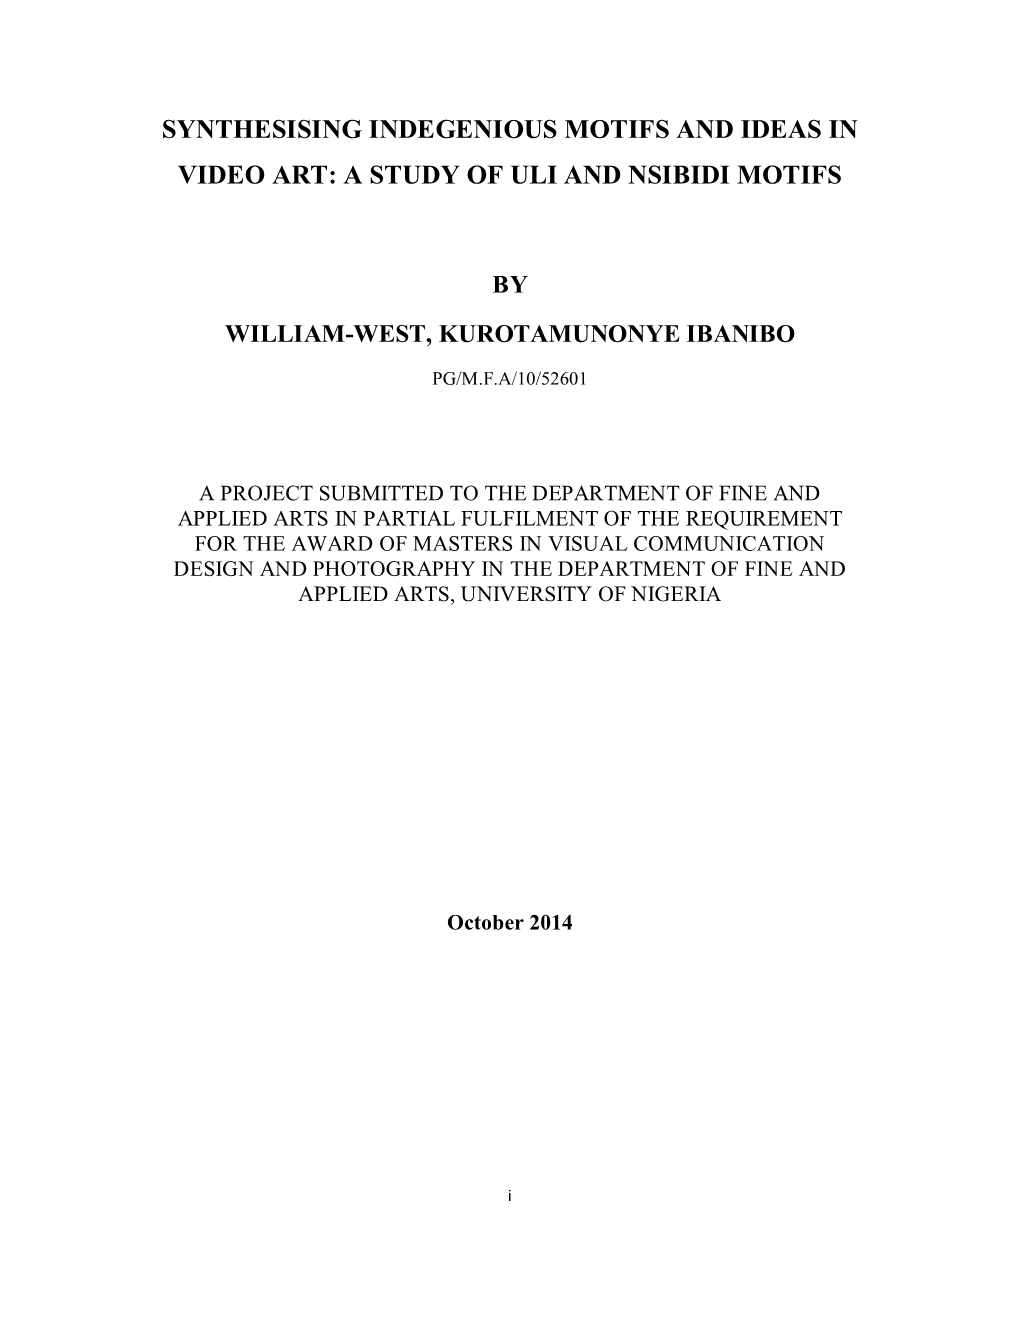 A Study of Uli and Nsibidi Motifs